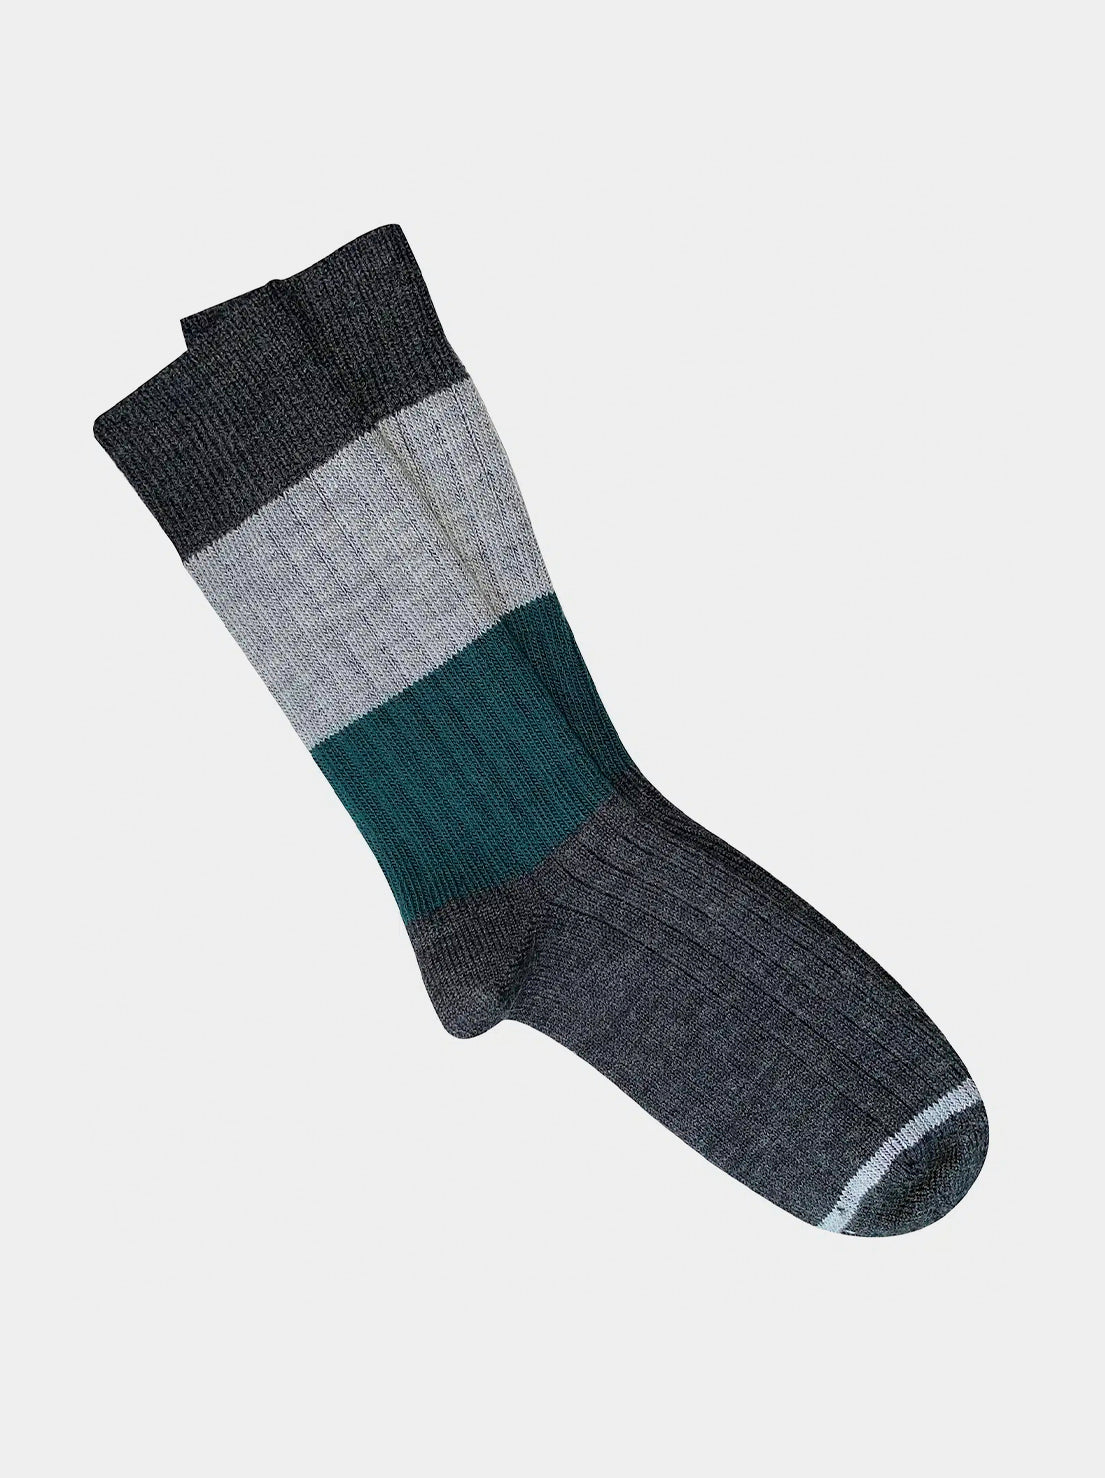 Tightology - Chunky Rib Merino Wool Socks - Charcoal Stripe